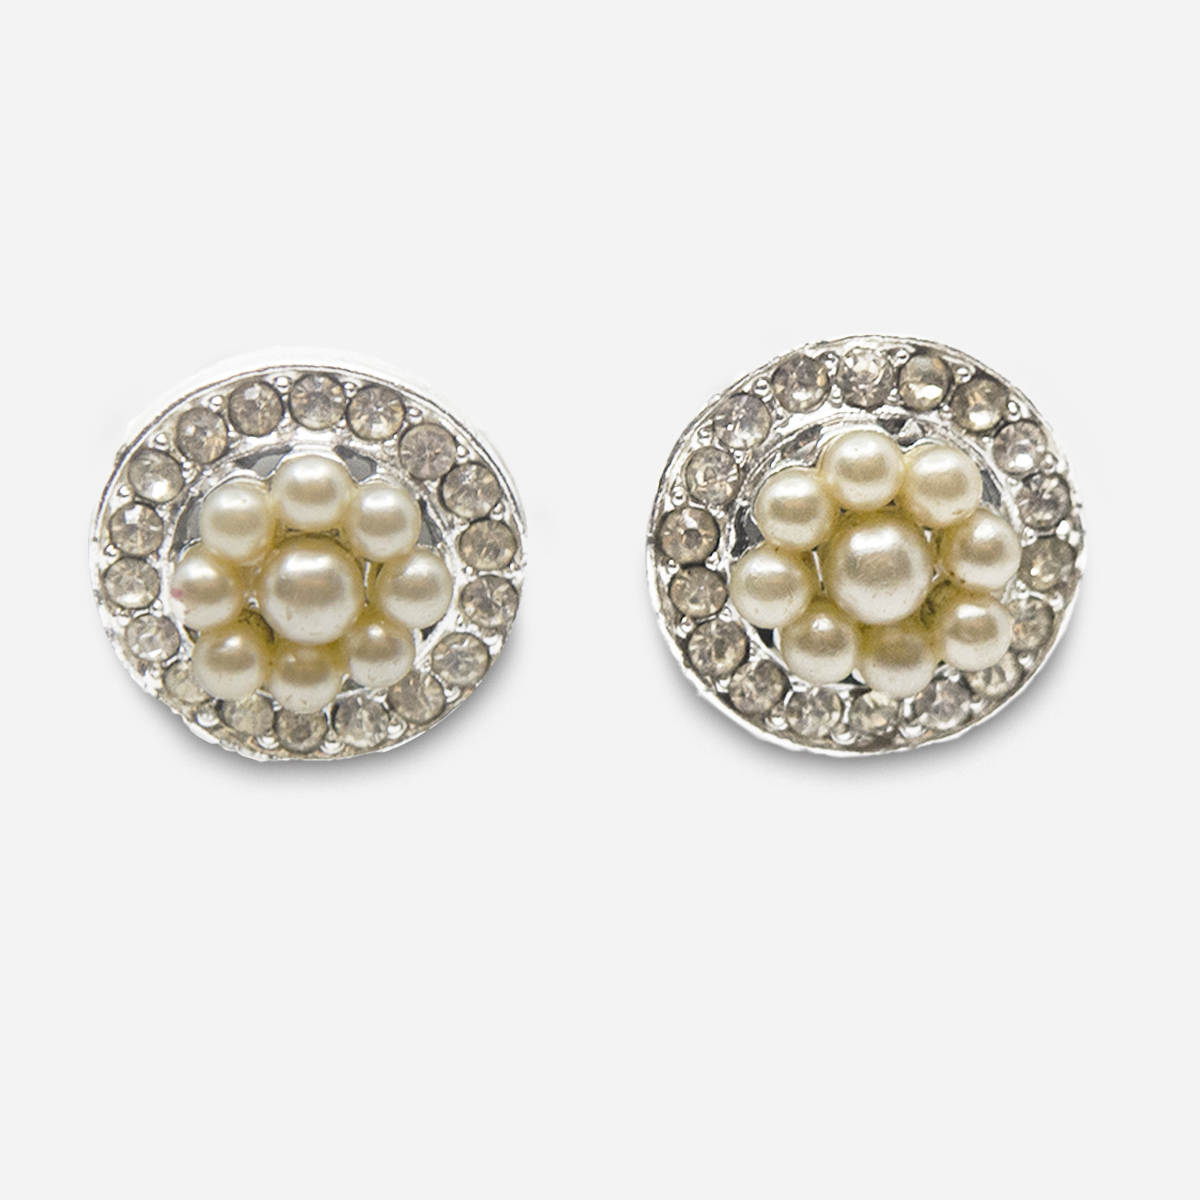 1950s Pearl & Rhinestone earrings